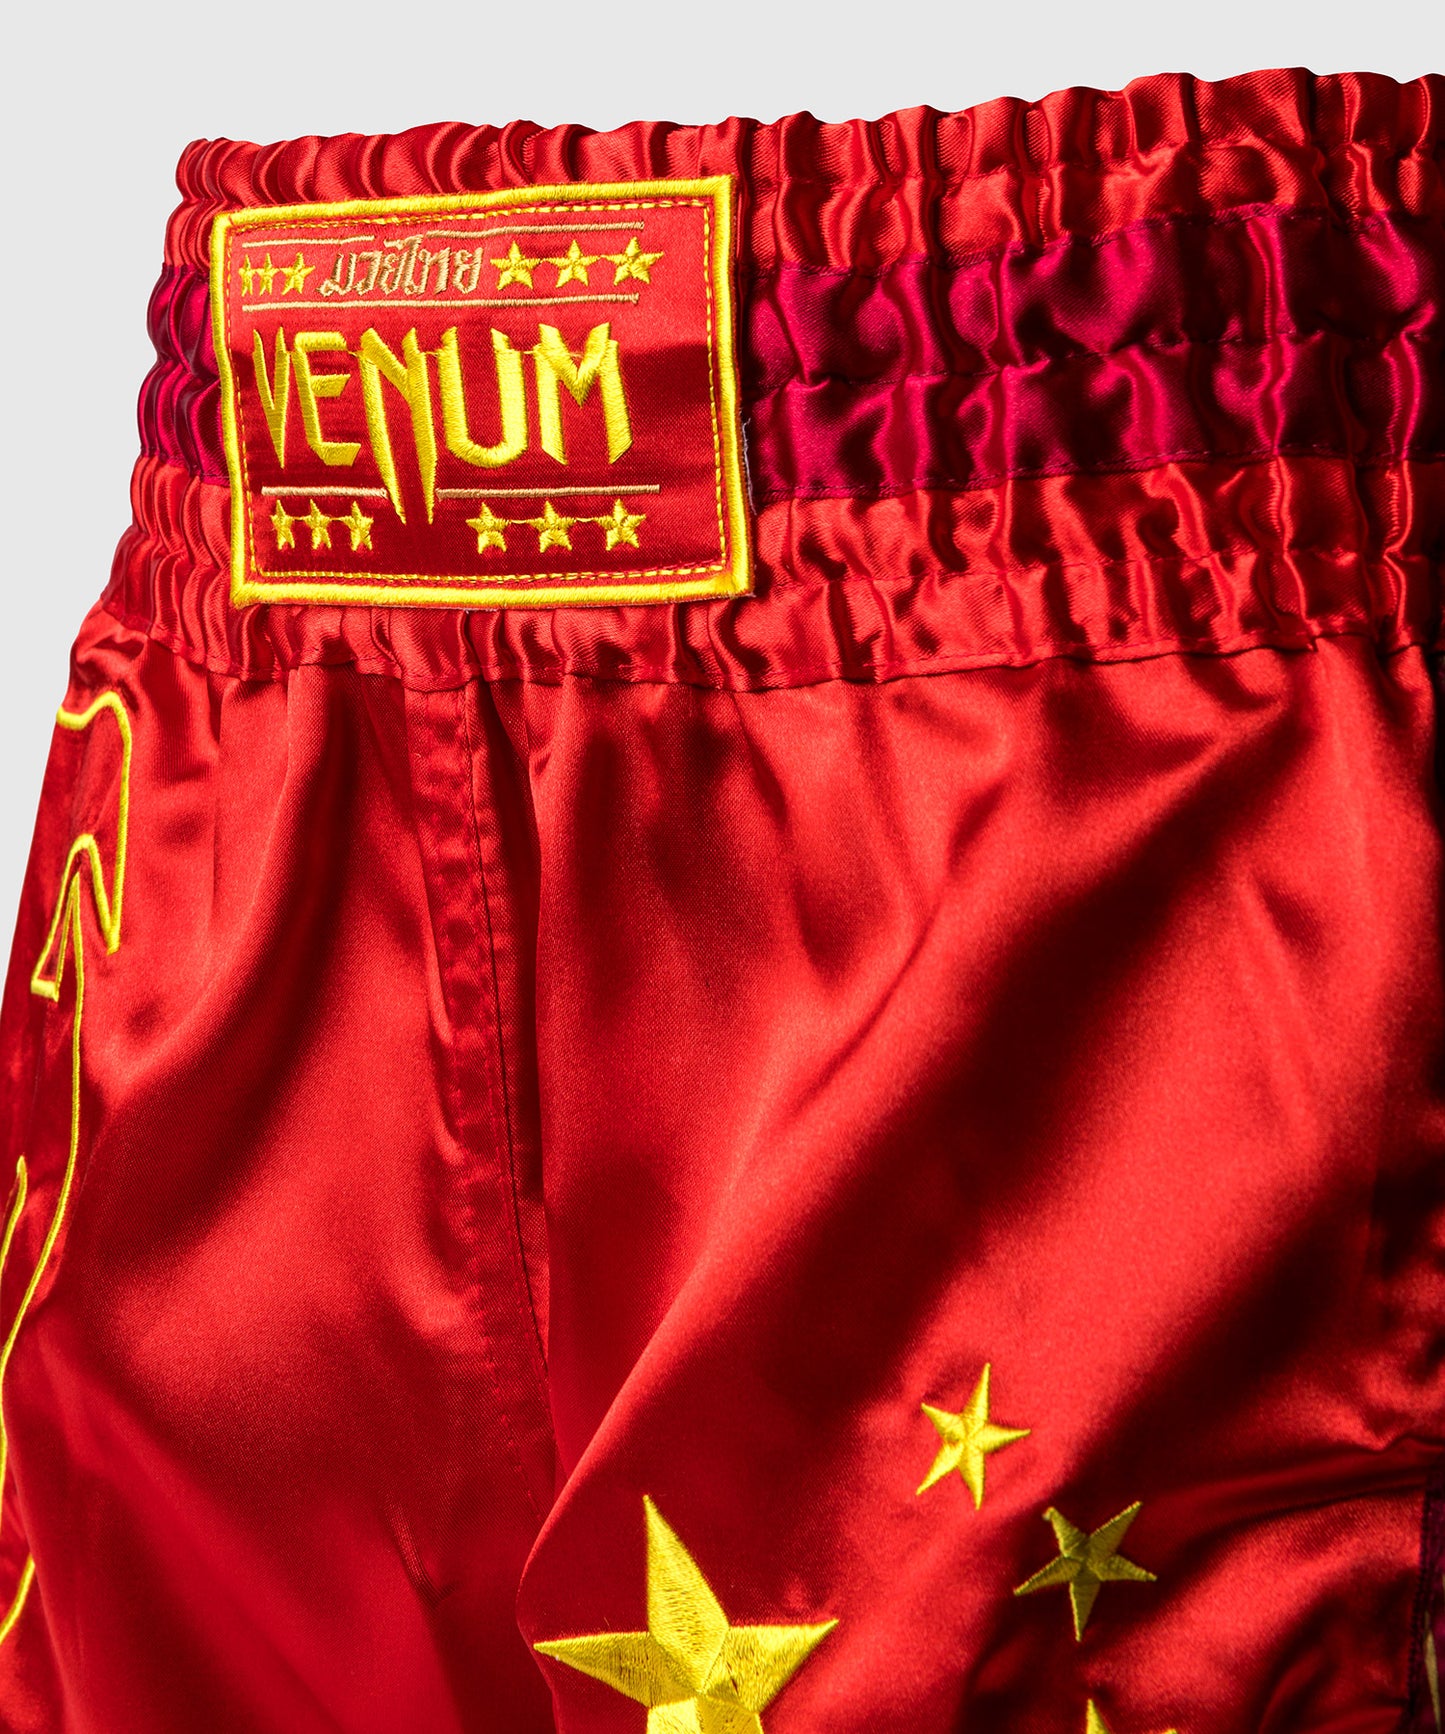 Short de Muay Thai Venum MT Flags - UK